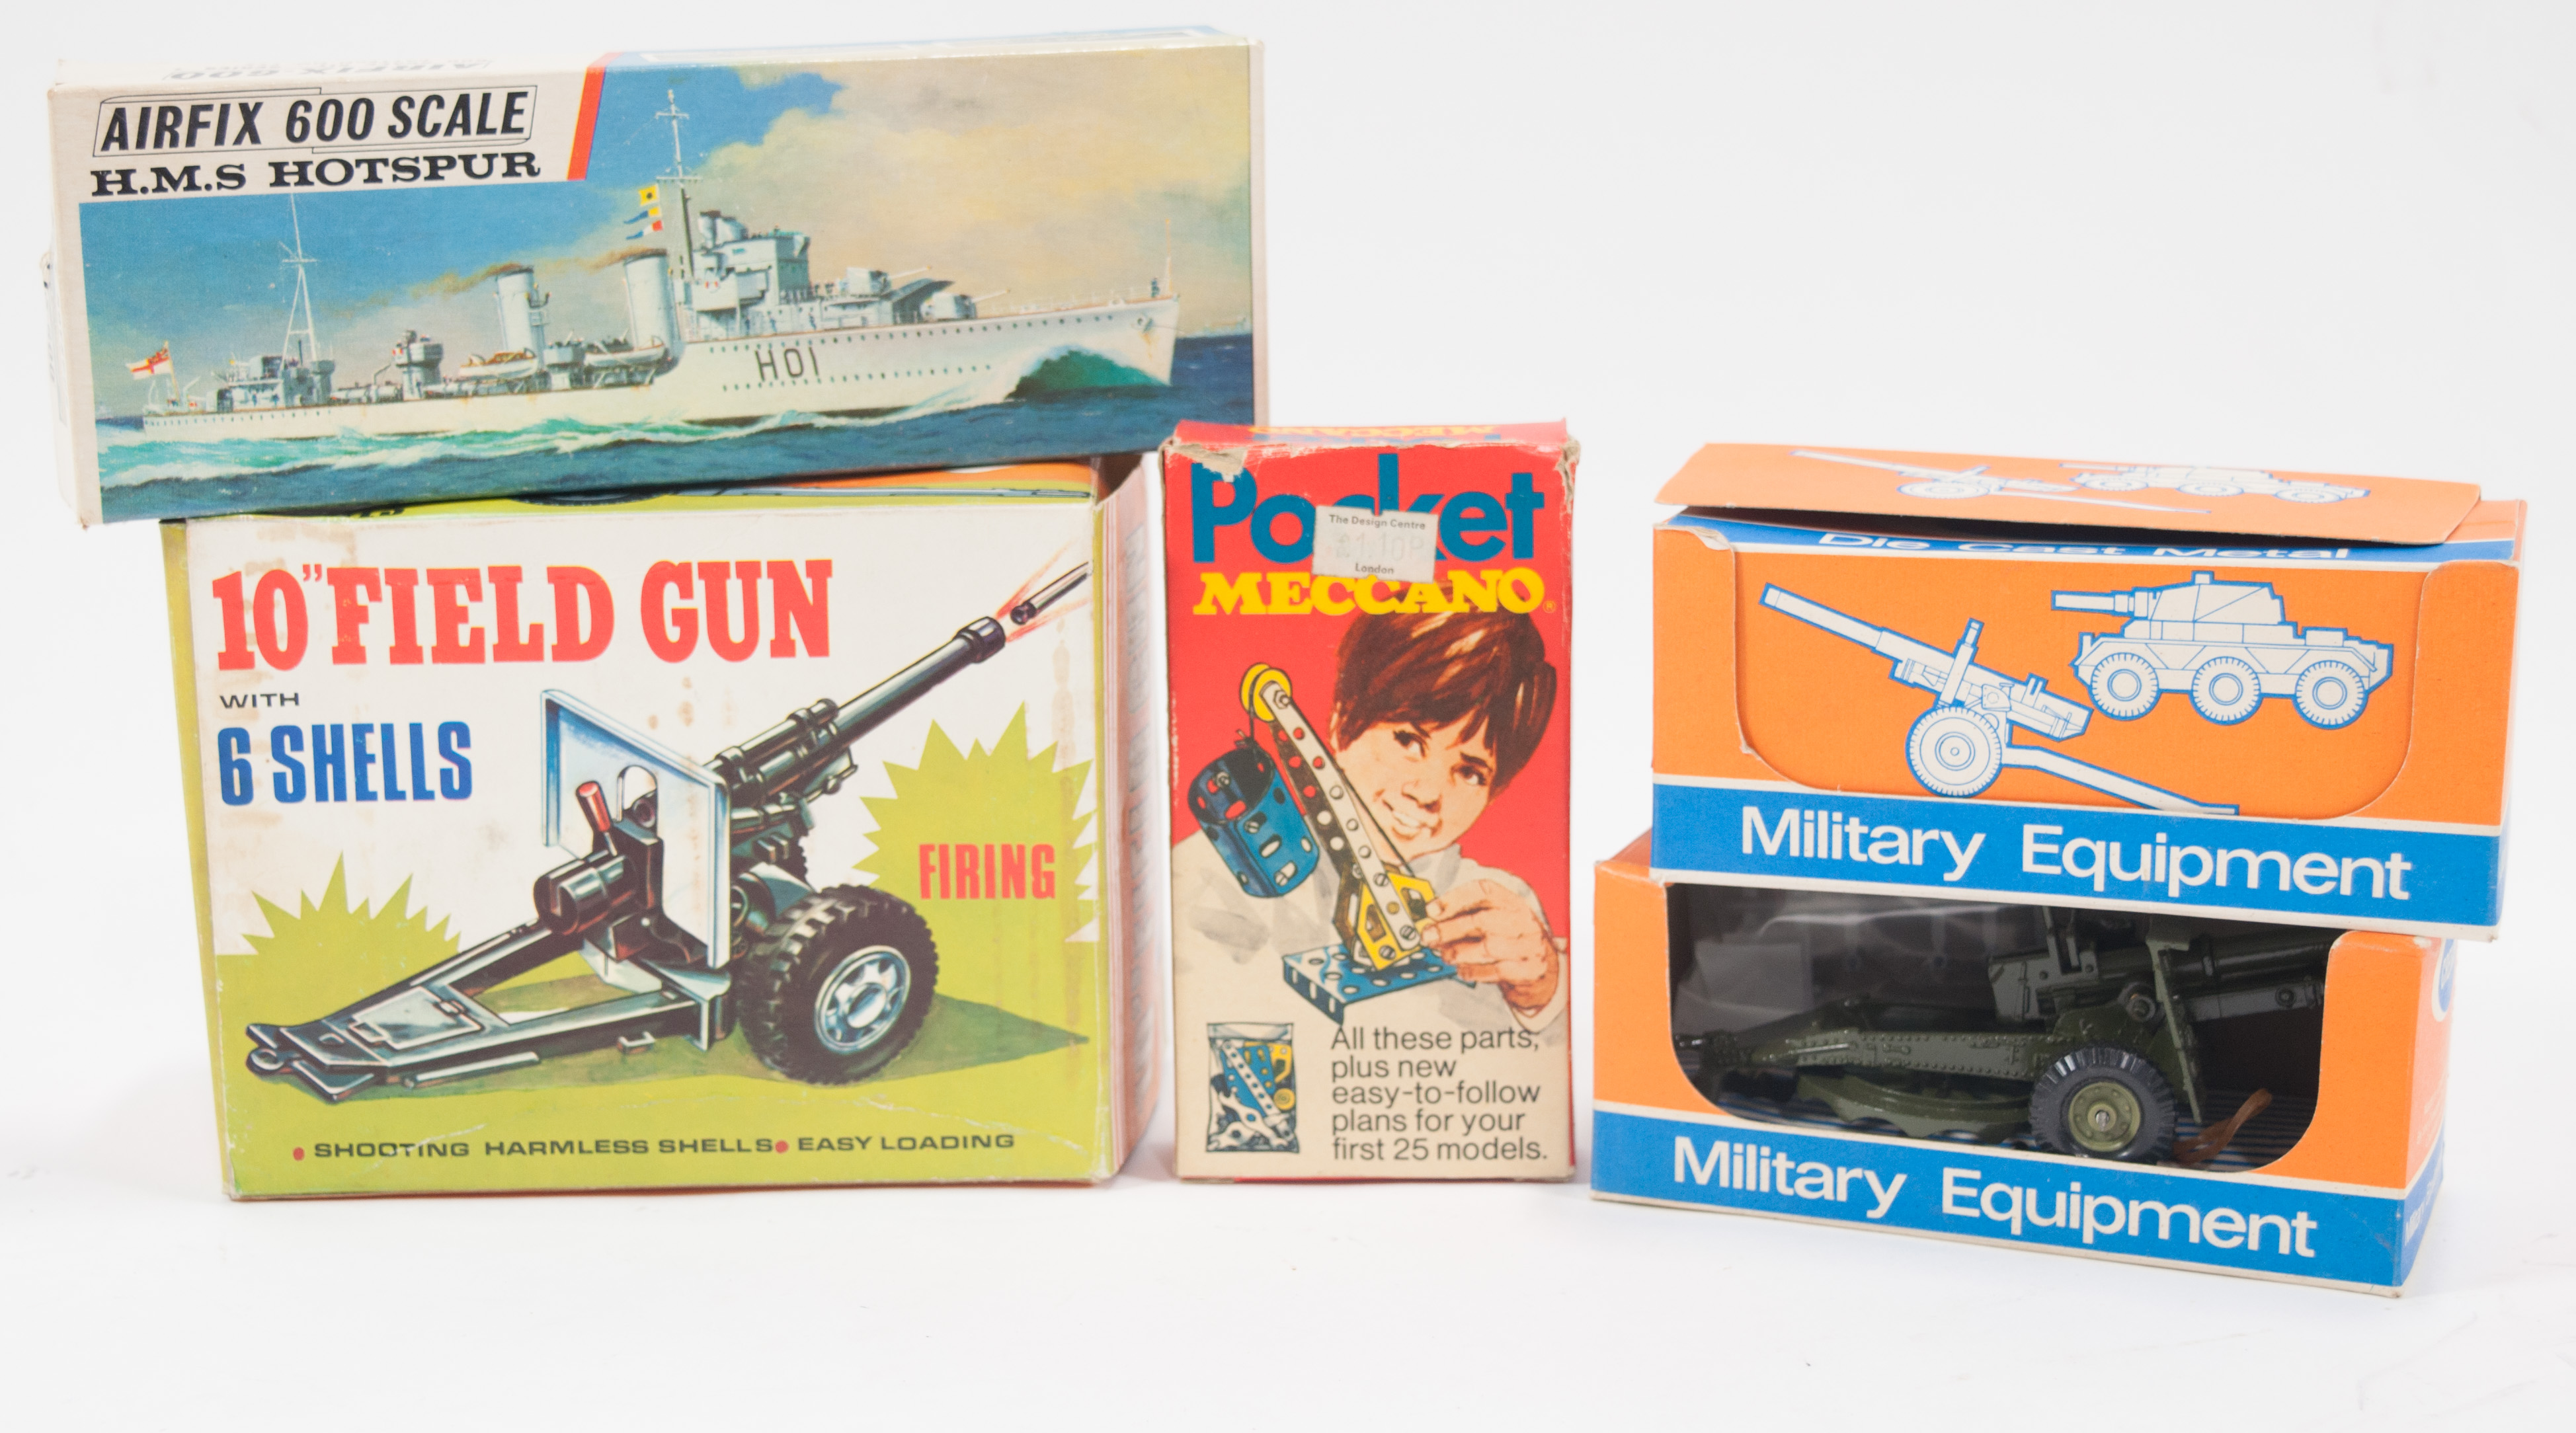 Two Crescent Toys diecast quick firing guns, boxed, Airfix HMS Hotspur, Pocket Meccano,